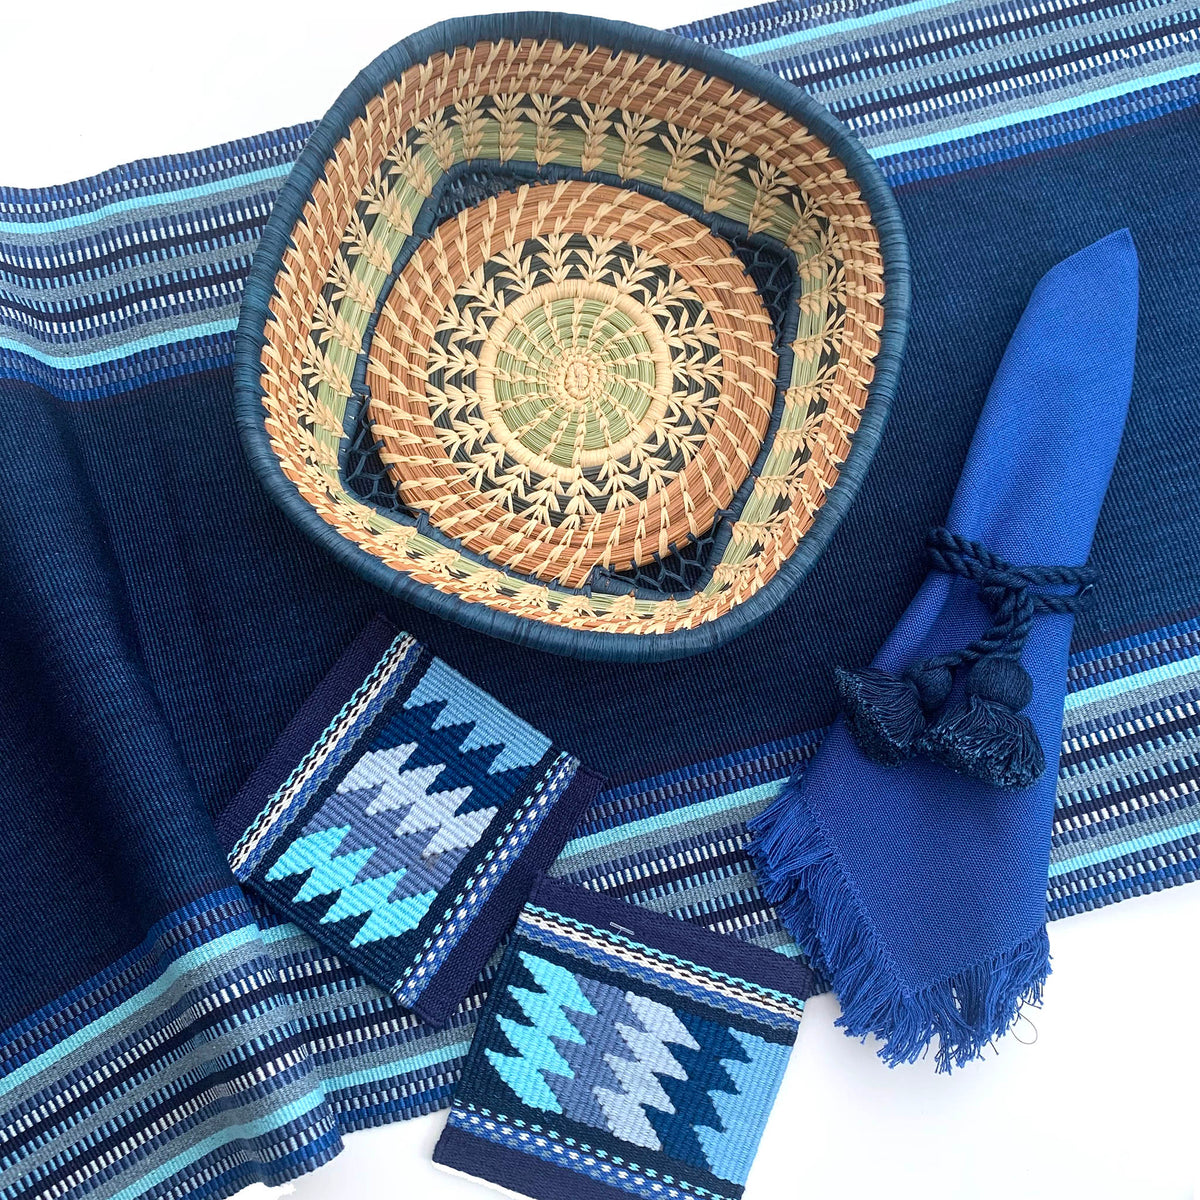 Handwoven Tapestry Coaster Set in Indigo &amp; Blues